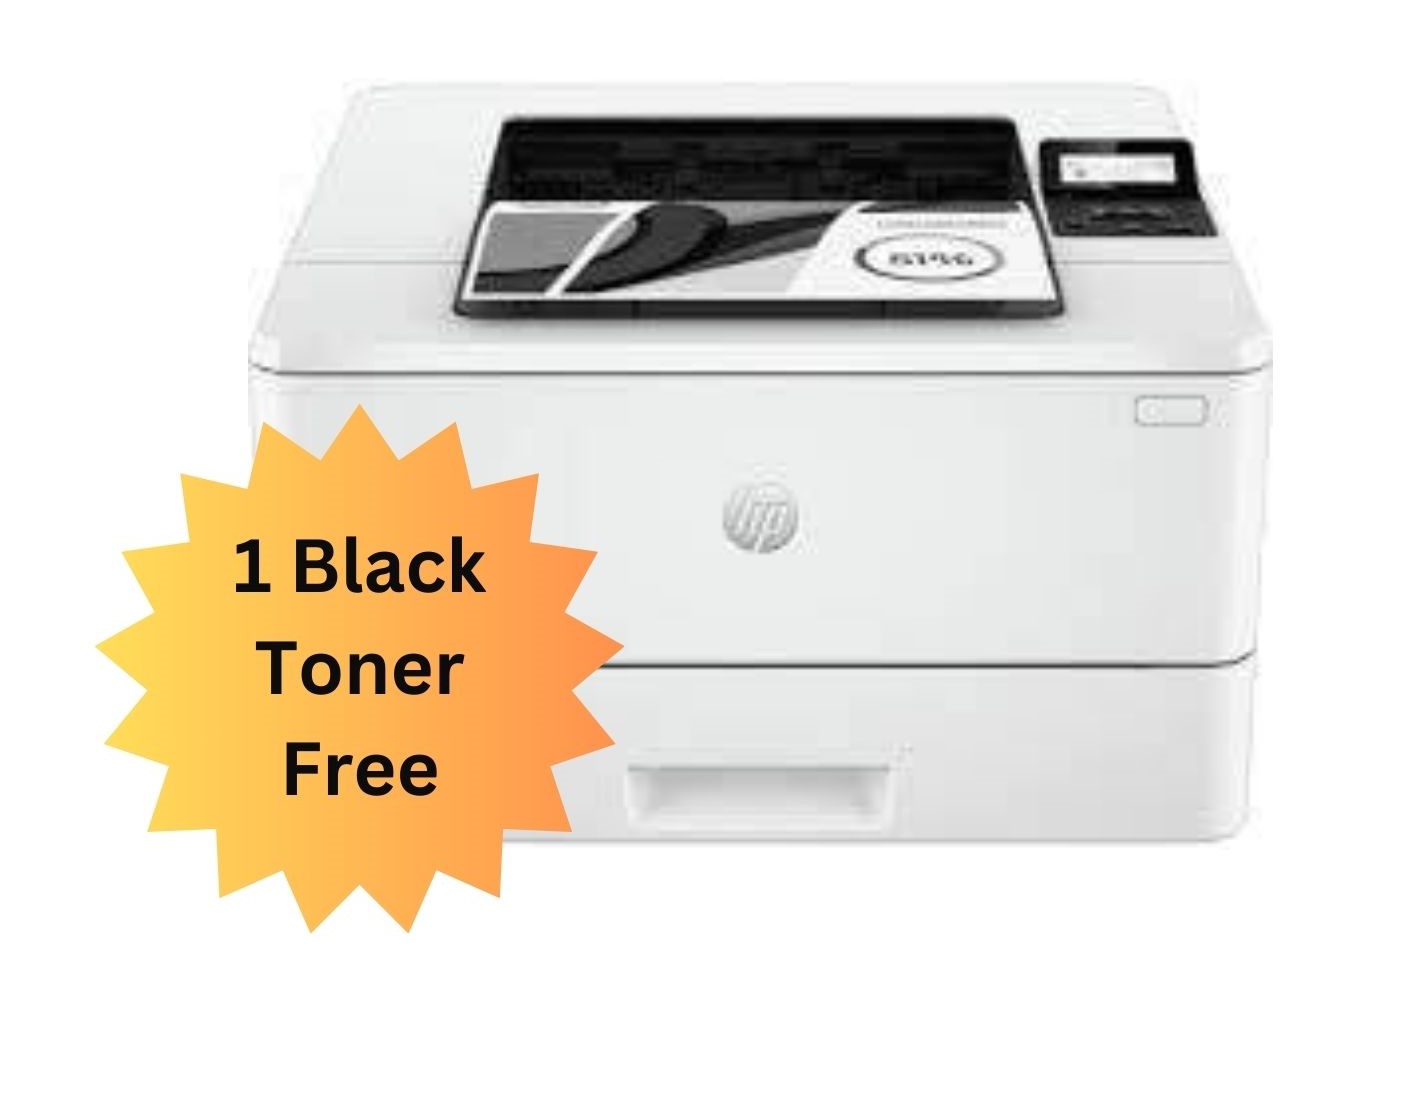 HP LaserJet Pro 4004d Printer-2Z613A